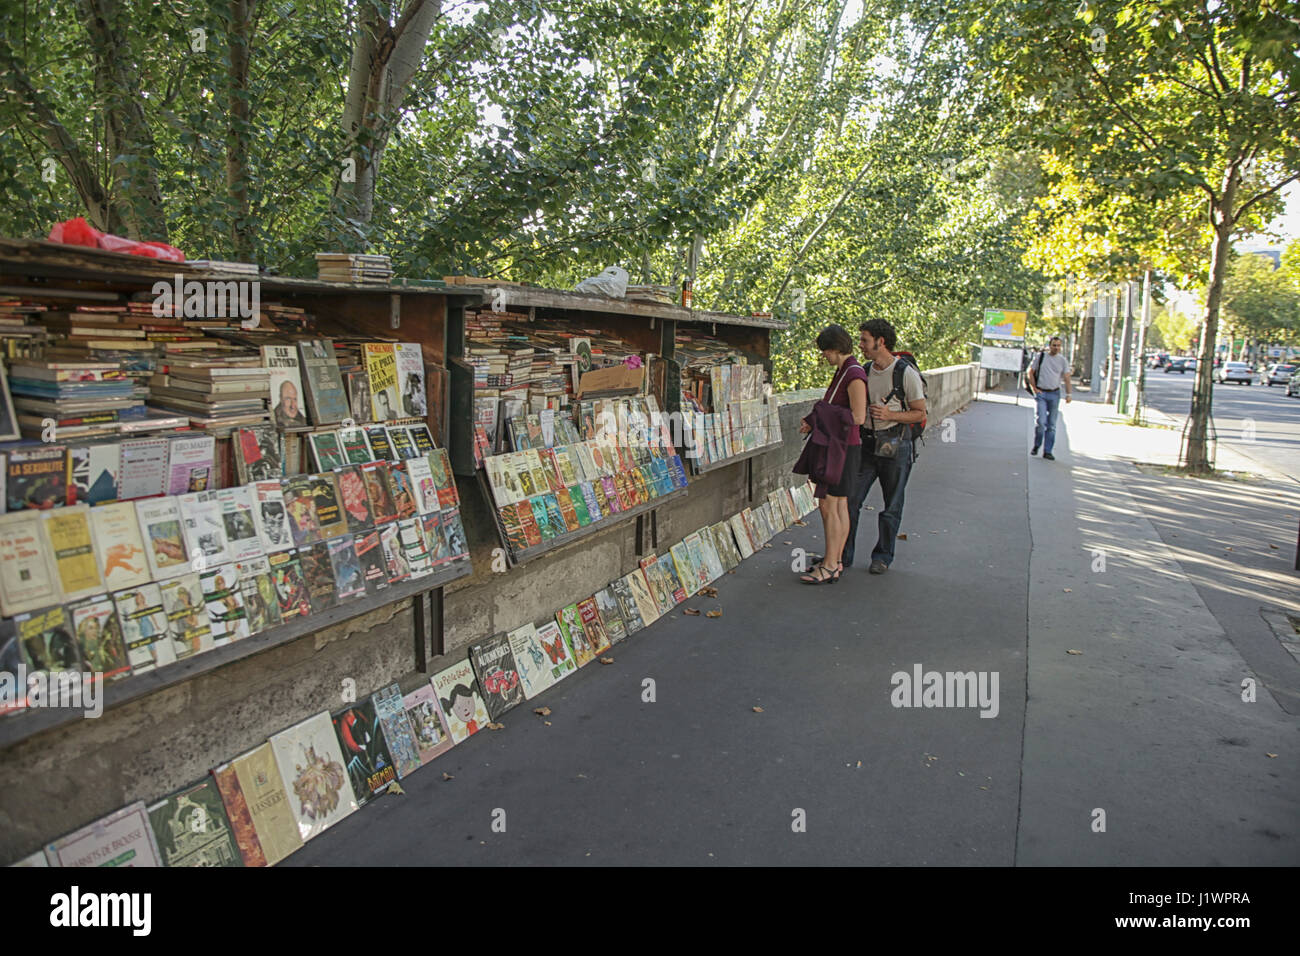 PARIS, FRANCE - september 19th, 2010: Second-hand book market on quay of river Seine near cathedral Notre Dame de Paris. Stock Photo